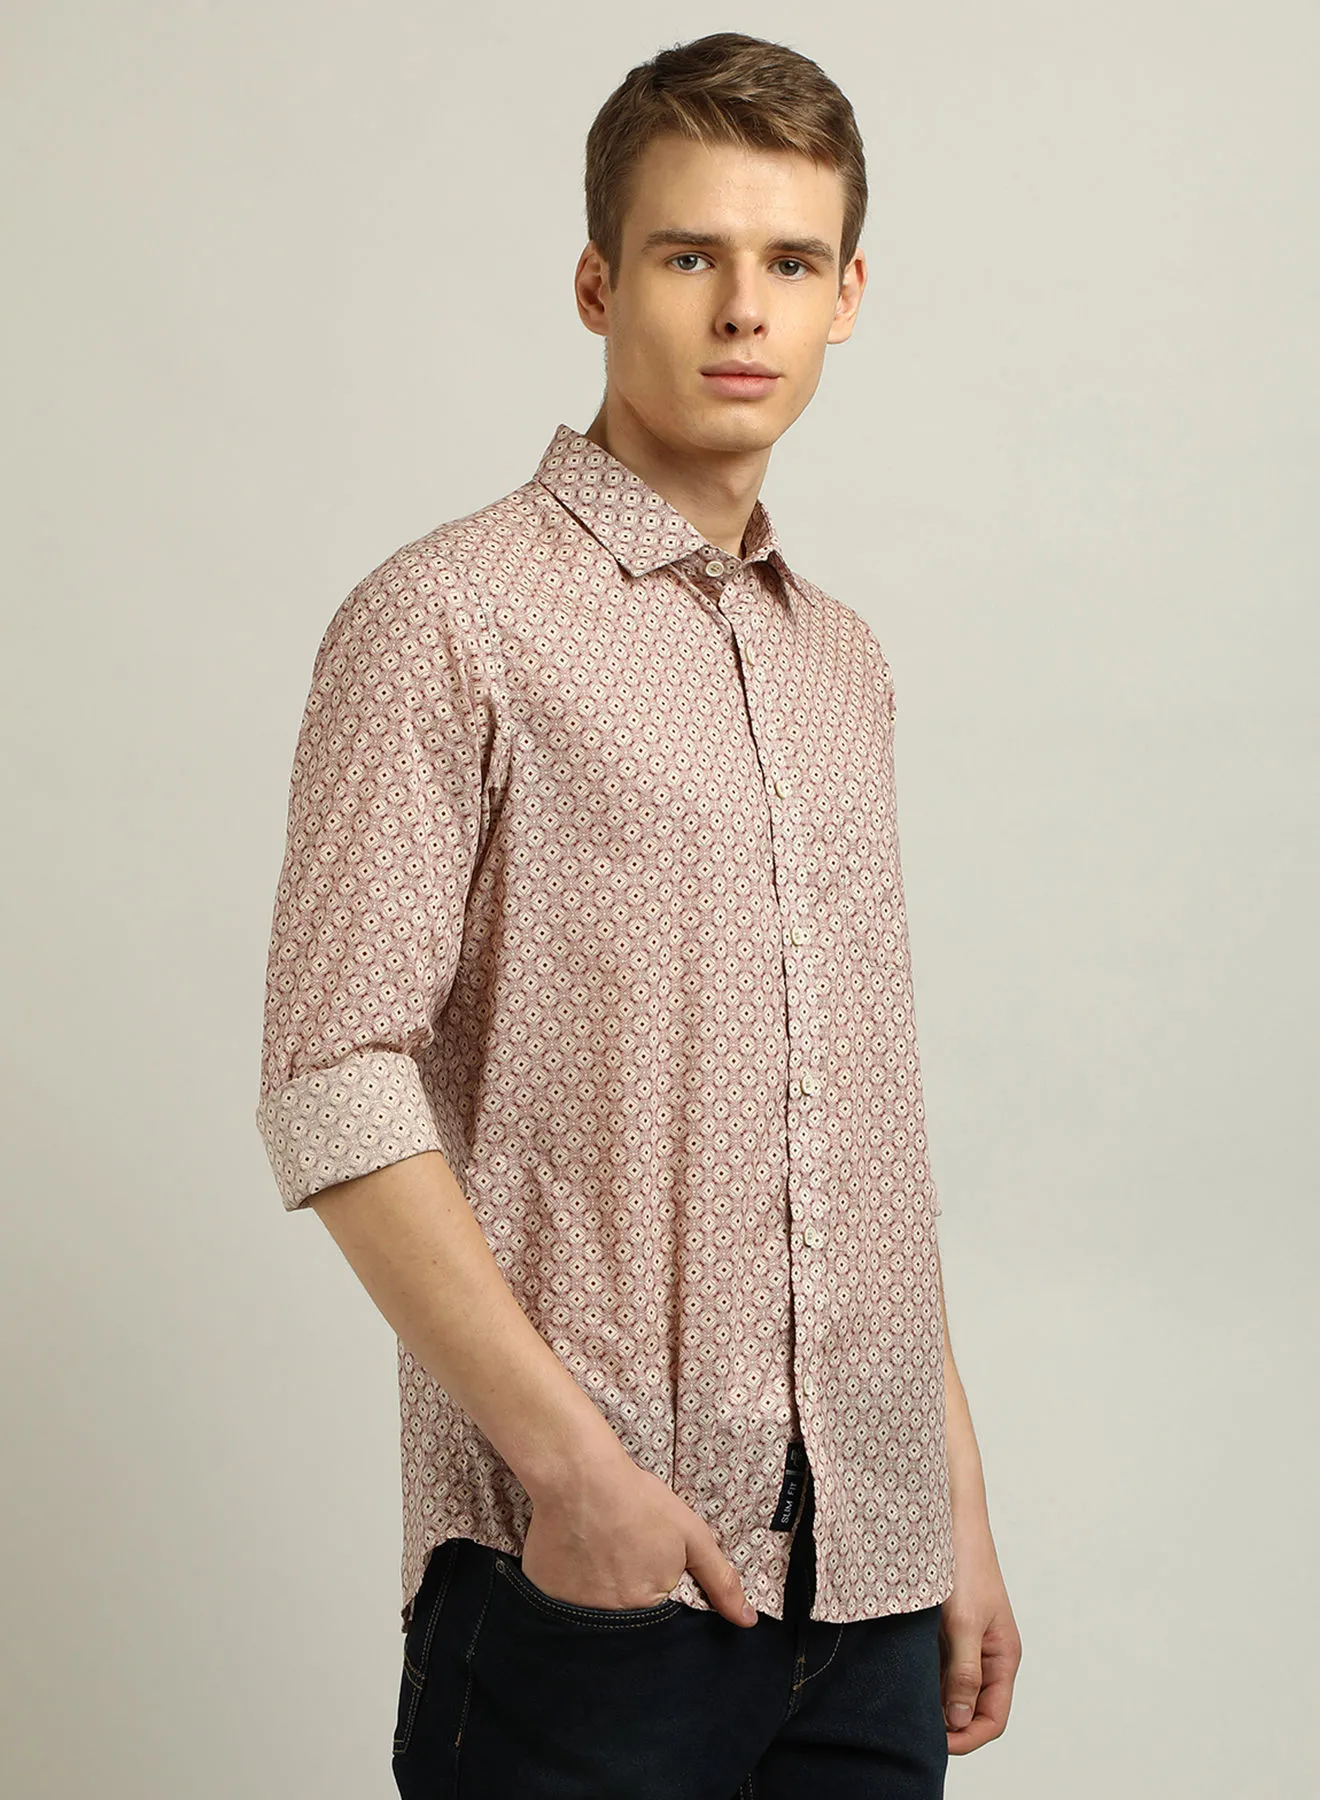 B&C Men's Printed Rolled-Up Sleeves Shirt Pink